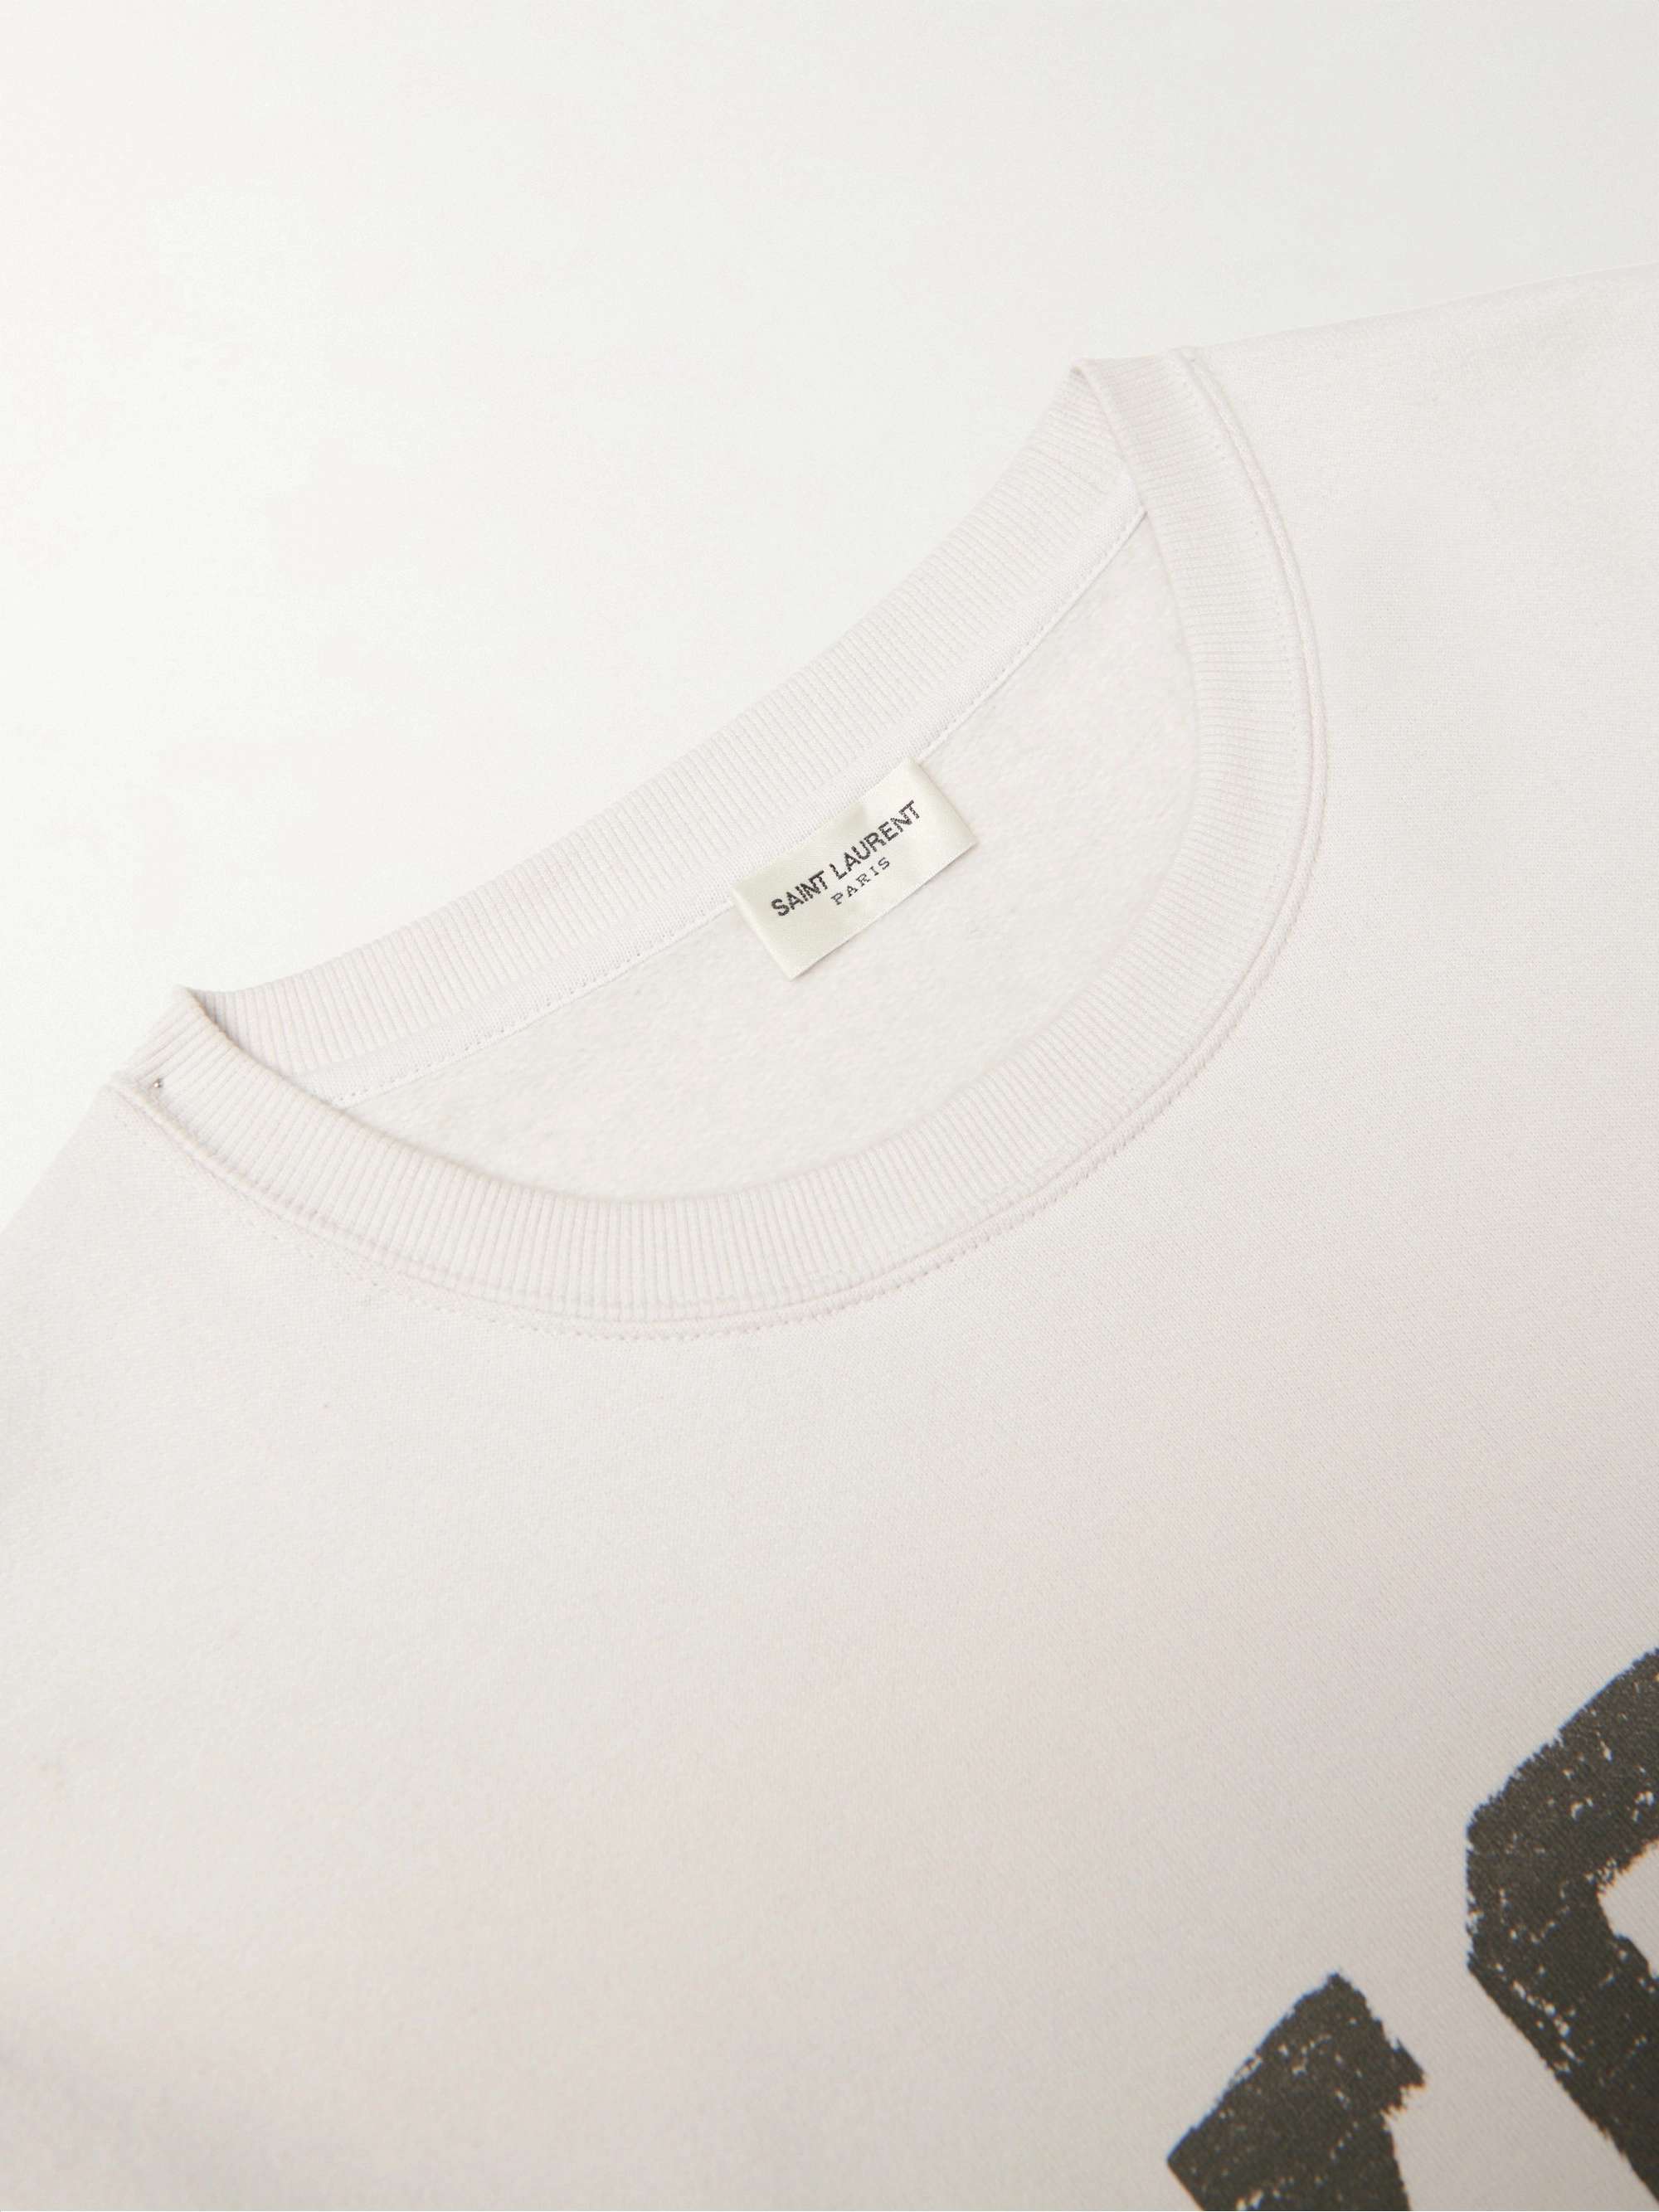 SAINT LAURENT Logo-Print Cotton-Jersey Sweatshirt